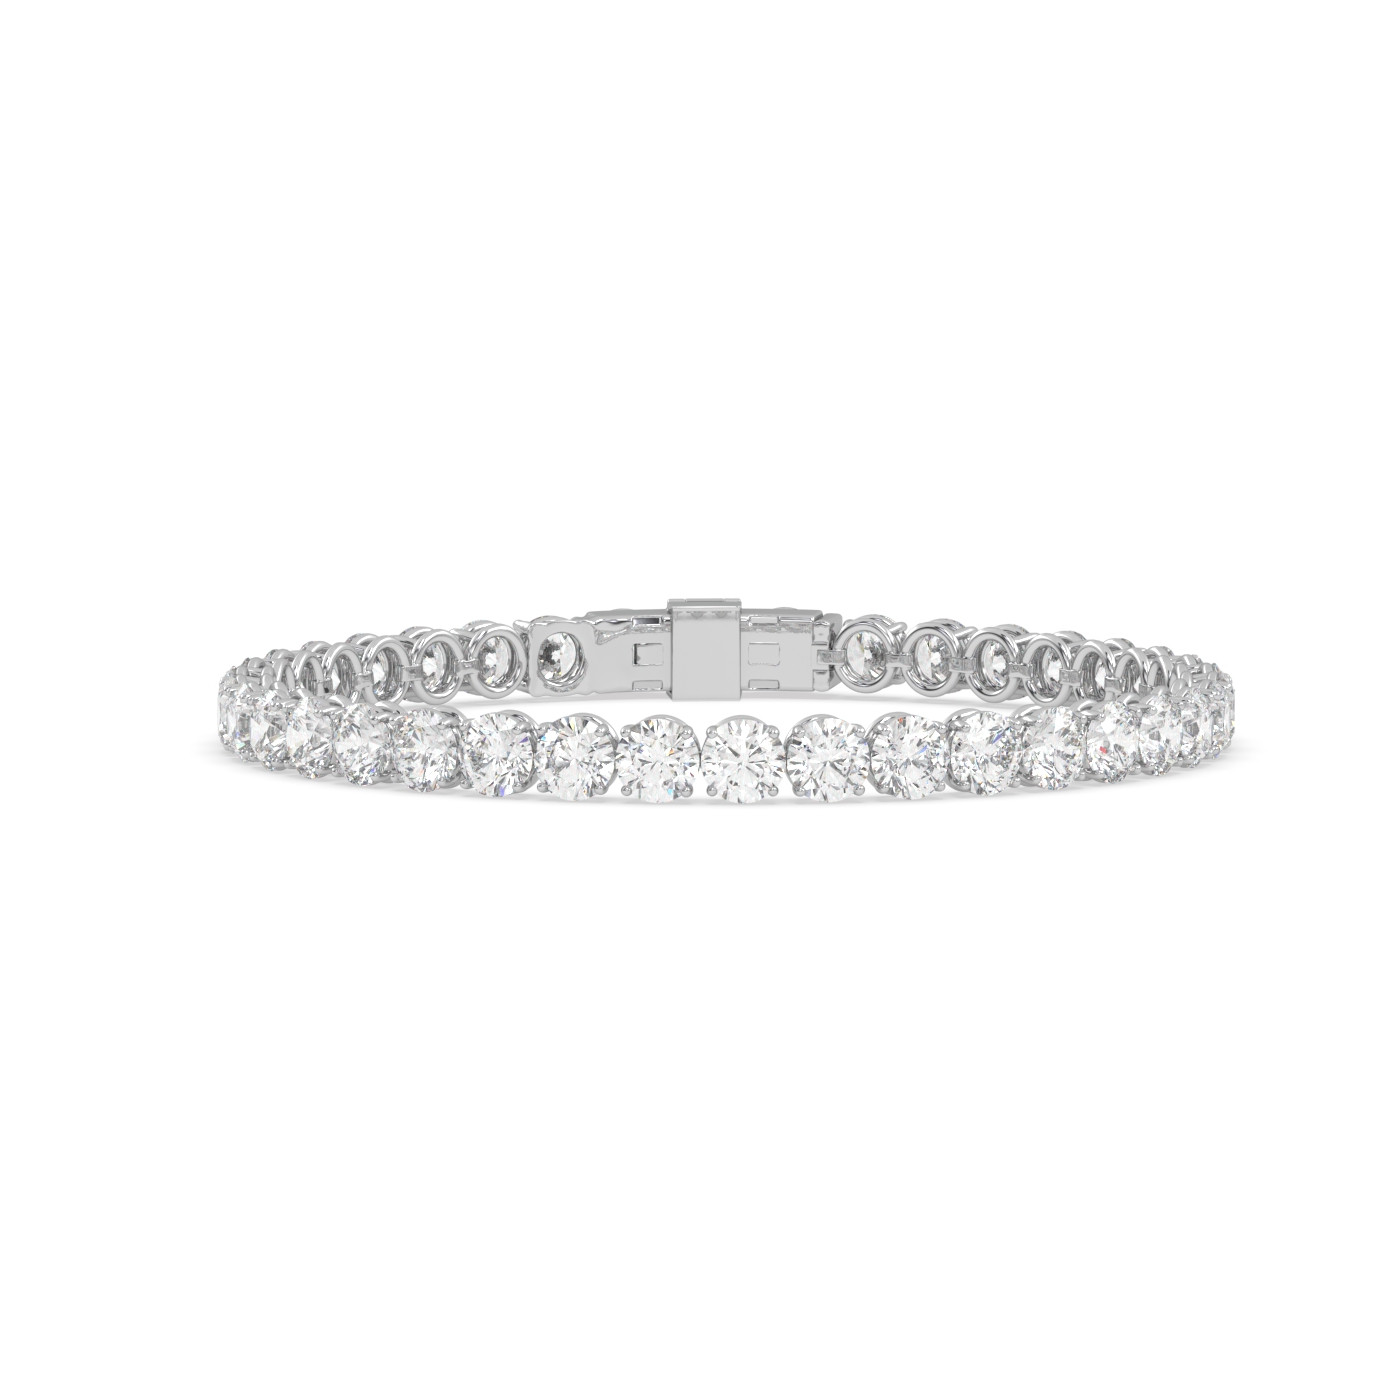 18k white gold 13 carat round diamond tennis bracelet with modern american lock system Photos & images